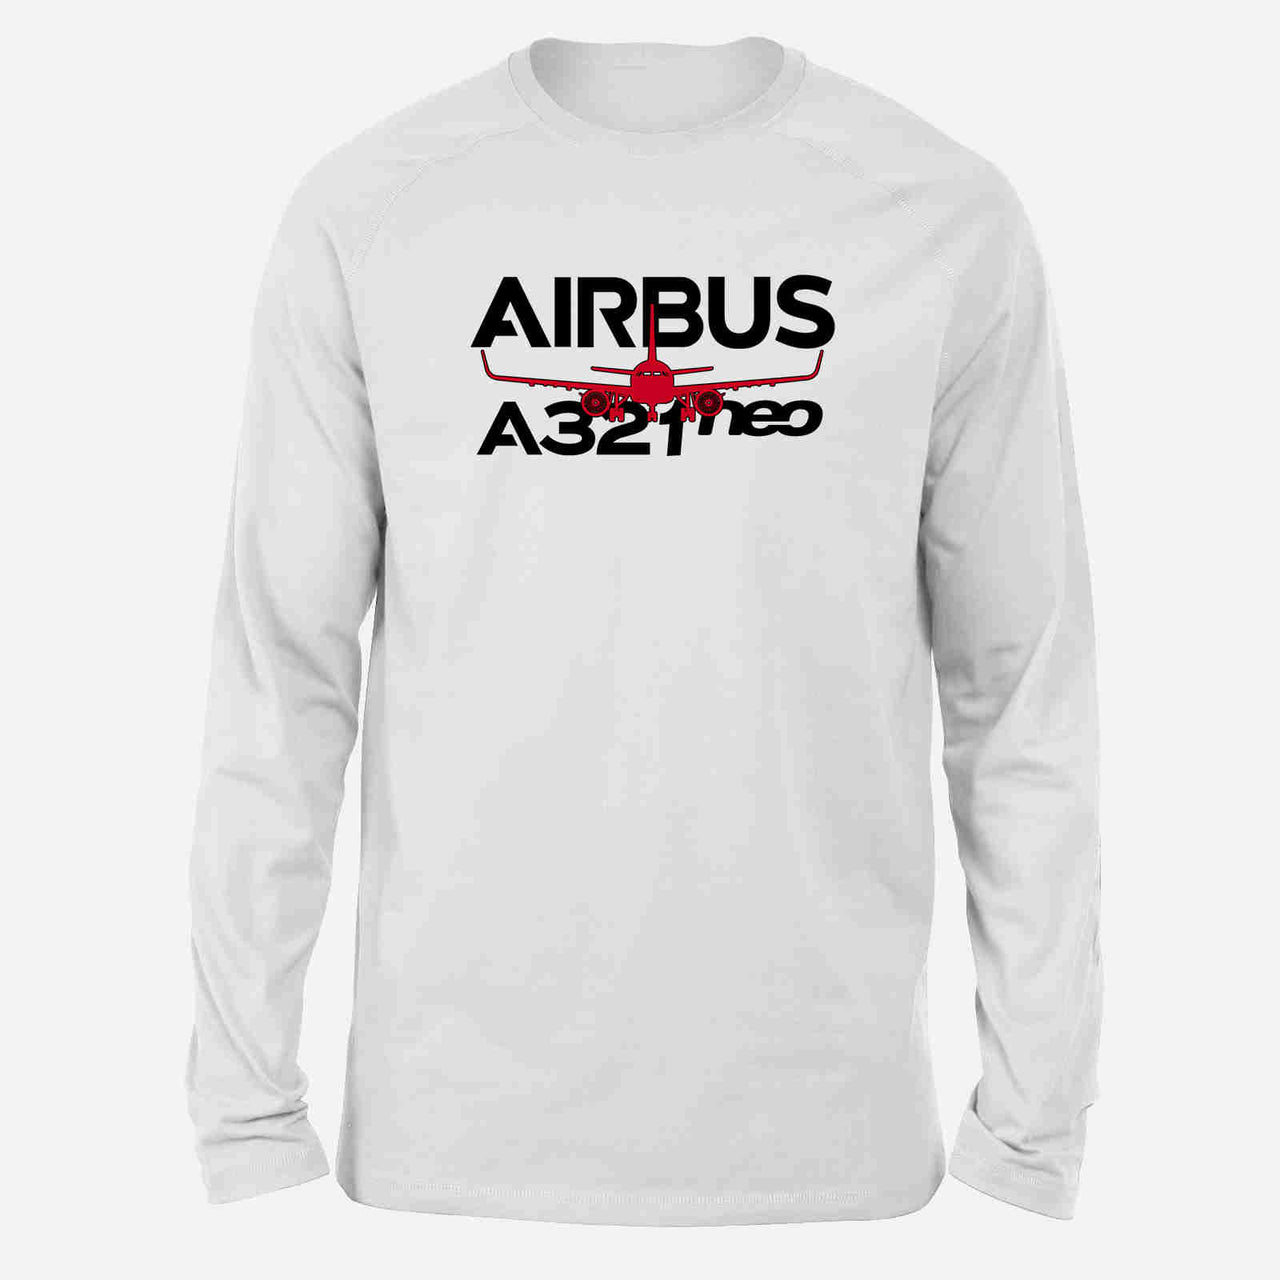 Amazing Airbus A321neo Designed Long-Sleeve T-Shirts